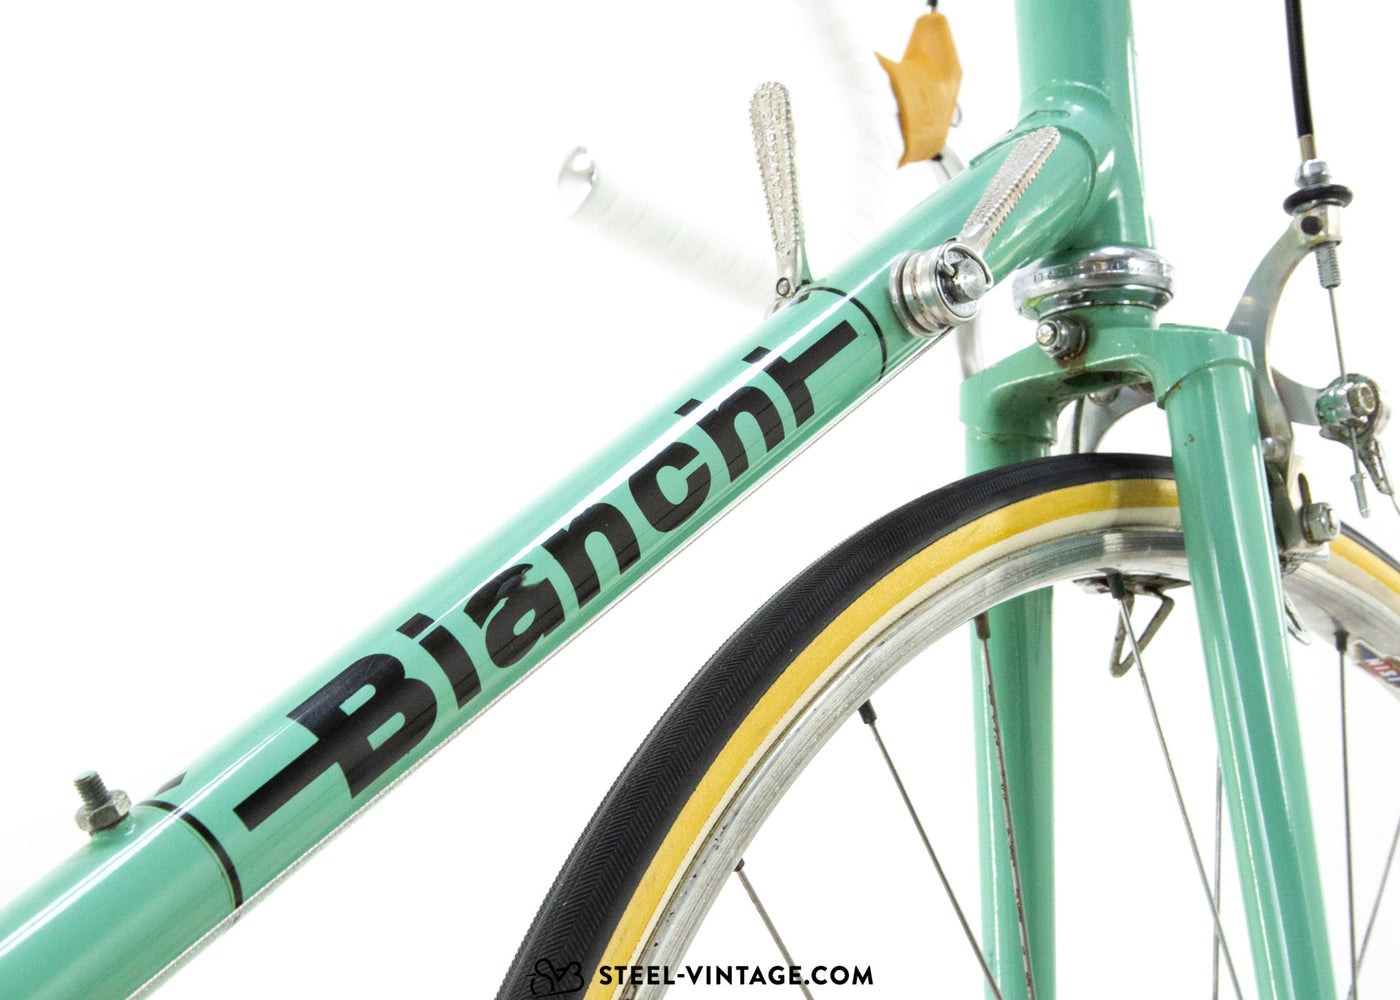 Bianchi Campione Del Mondo CX Road Bicycle 1977